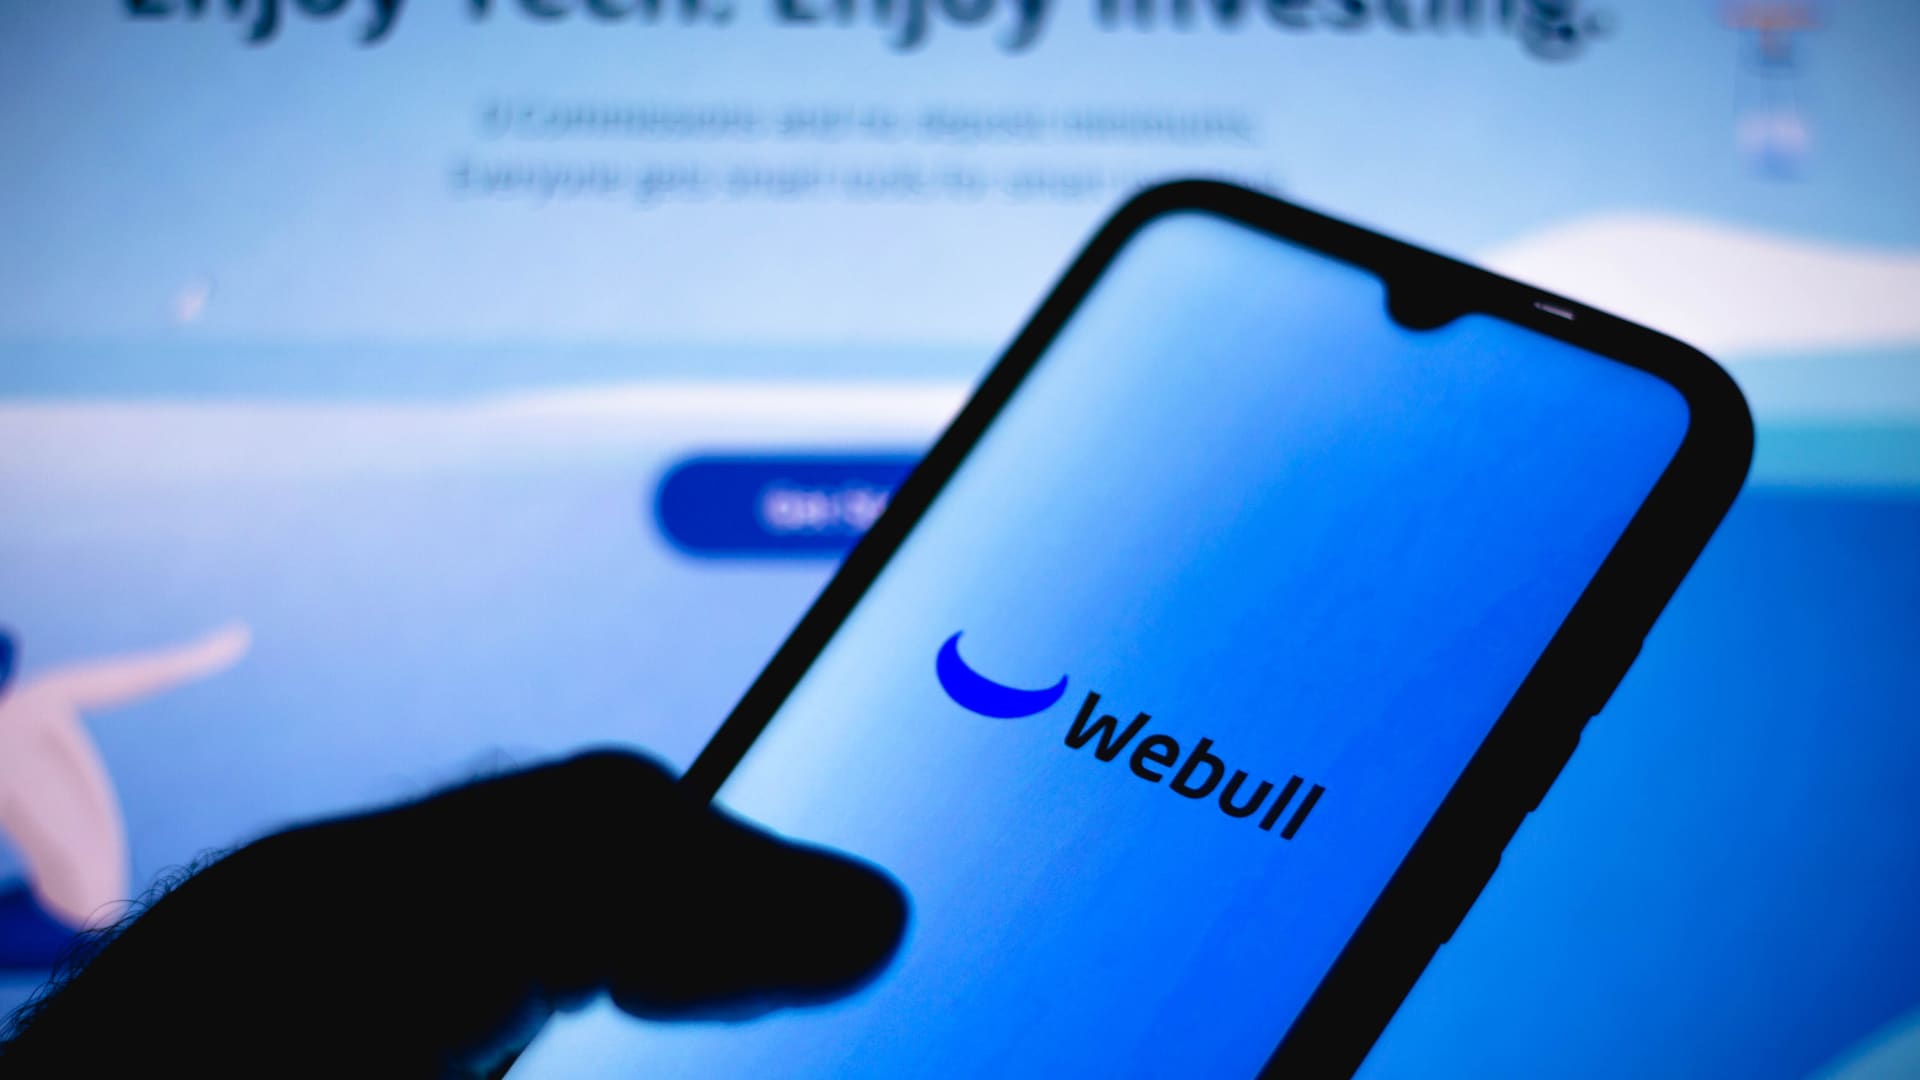 Online trading platform Webull is set to go public via a .3 billion SPAC deal